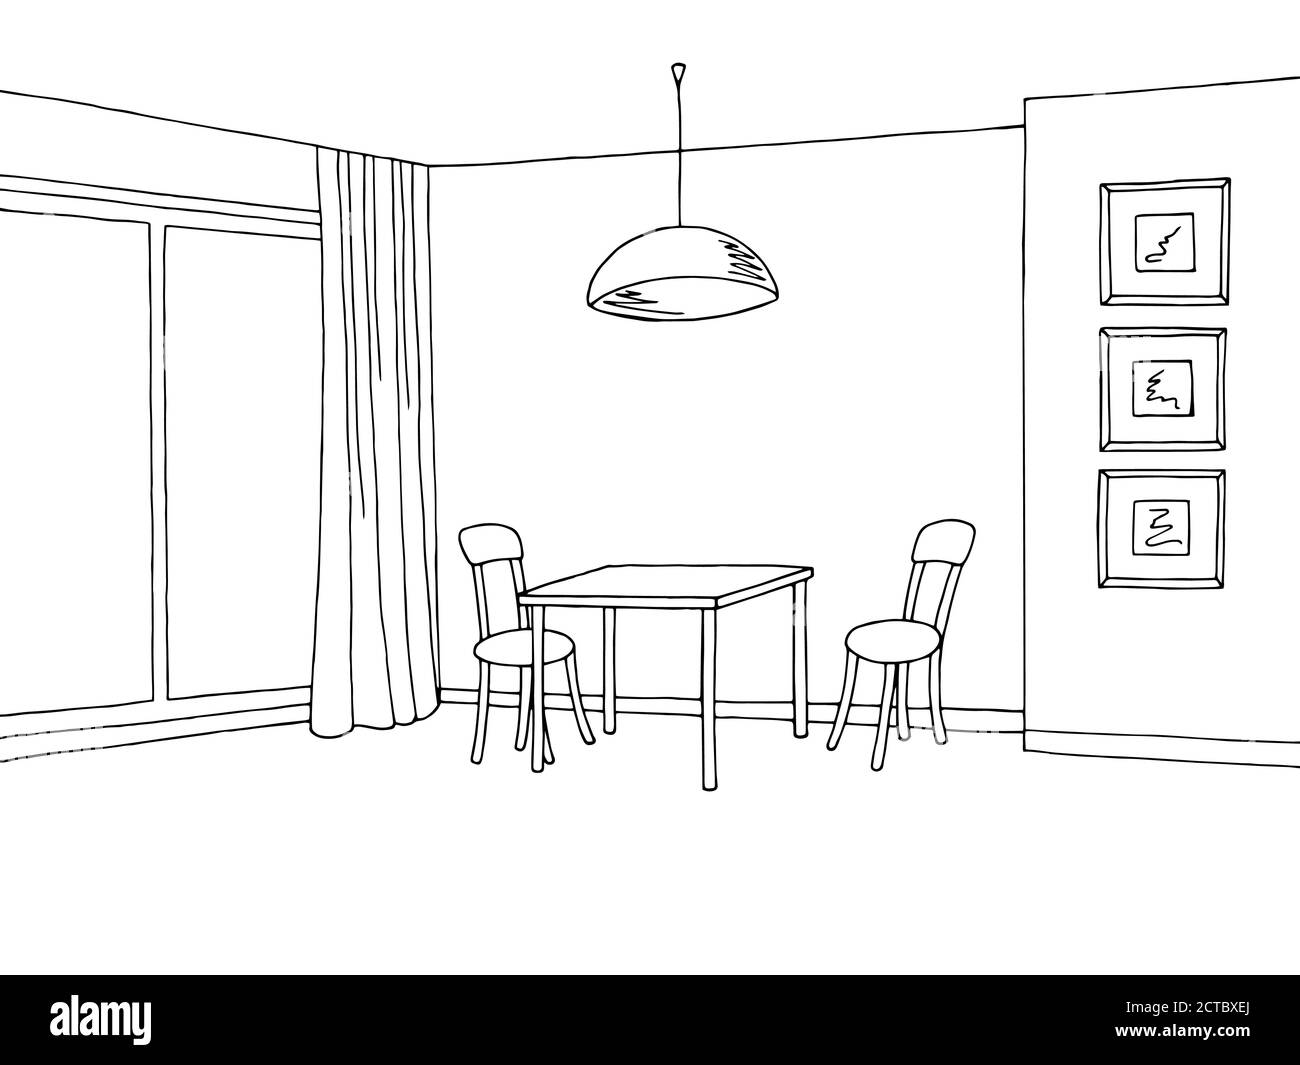 Kitchen room interior graphic art black white sketch illustration vector Stock Vector